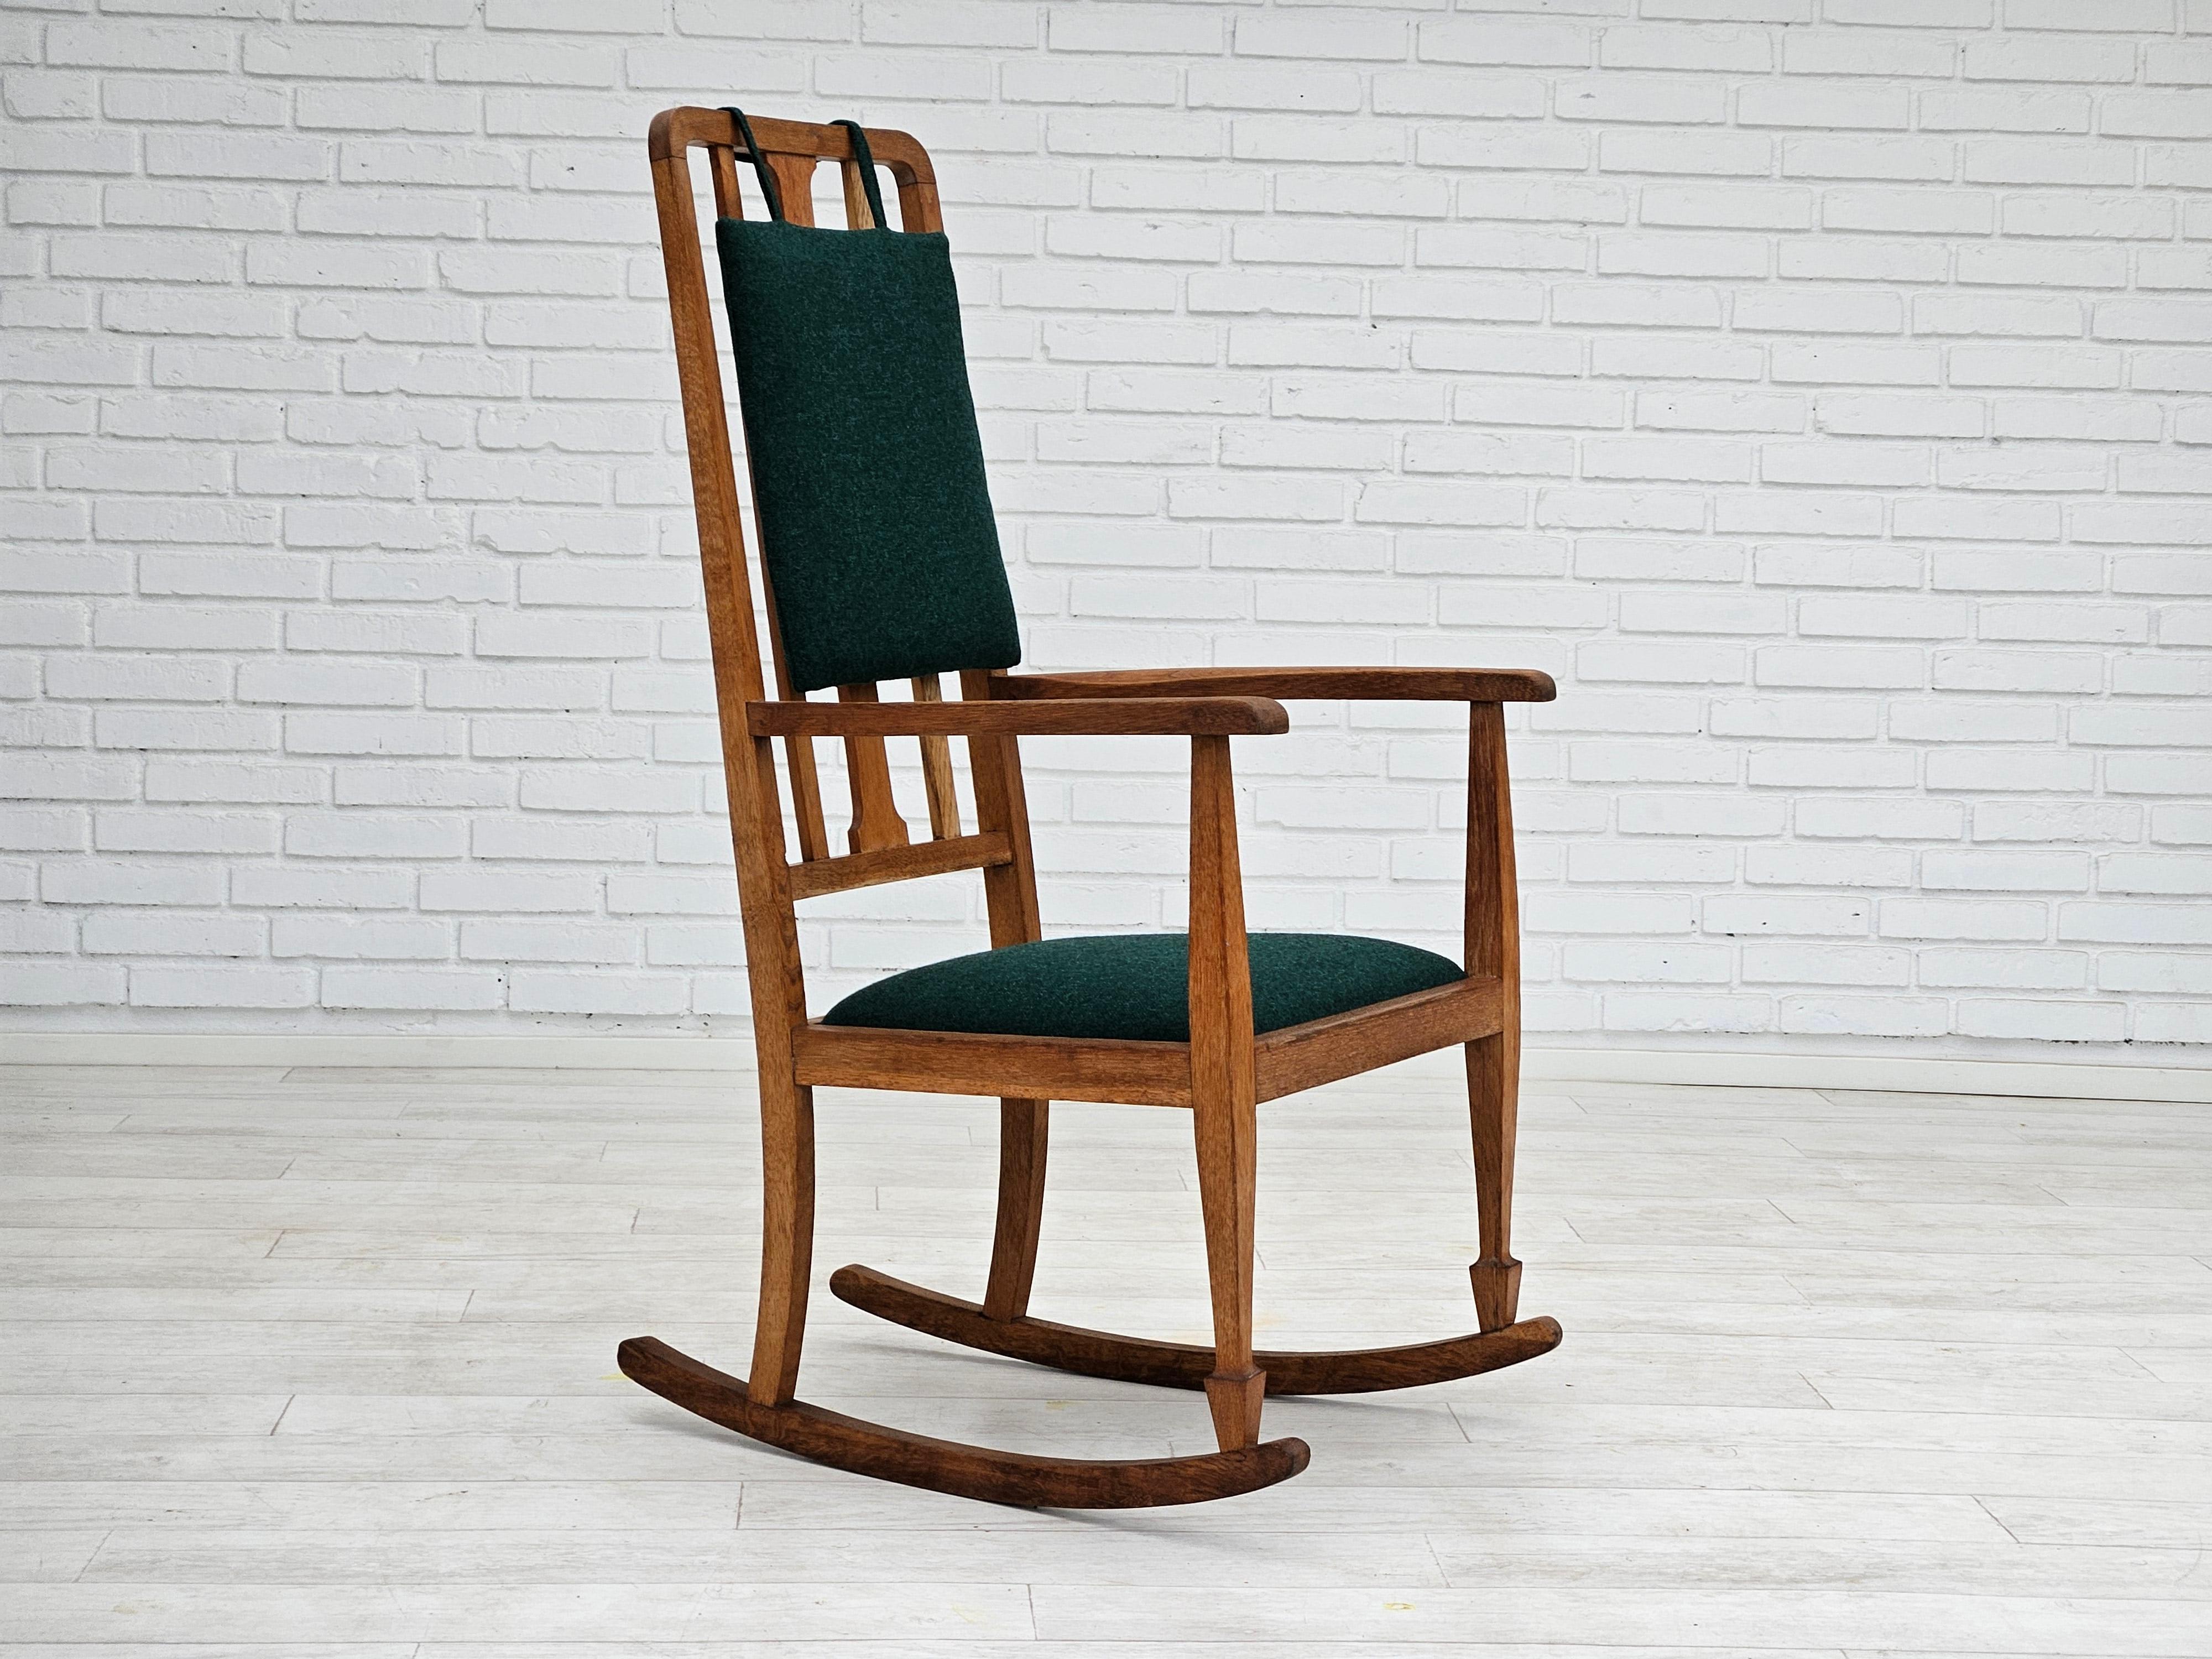 1960s, Danish reupholstered highback rocking chair. Oak wood and KVADRAT green furniture wool fabric Tonica 2. Wood renewed. Manufactured by Danish furniture manufacturer in about 1960s. Reupholstered by craftsman.